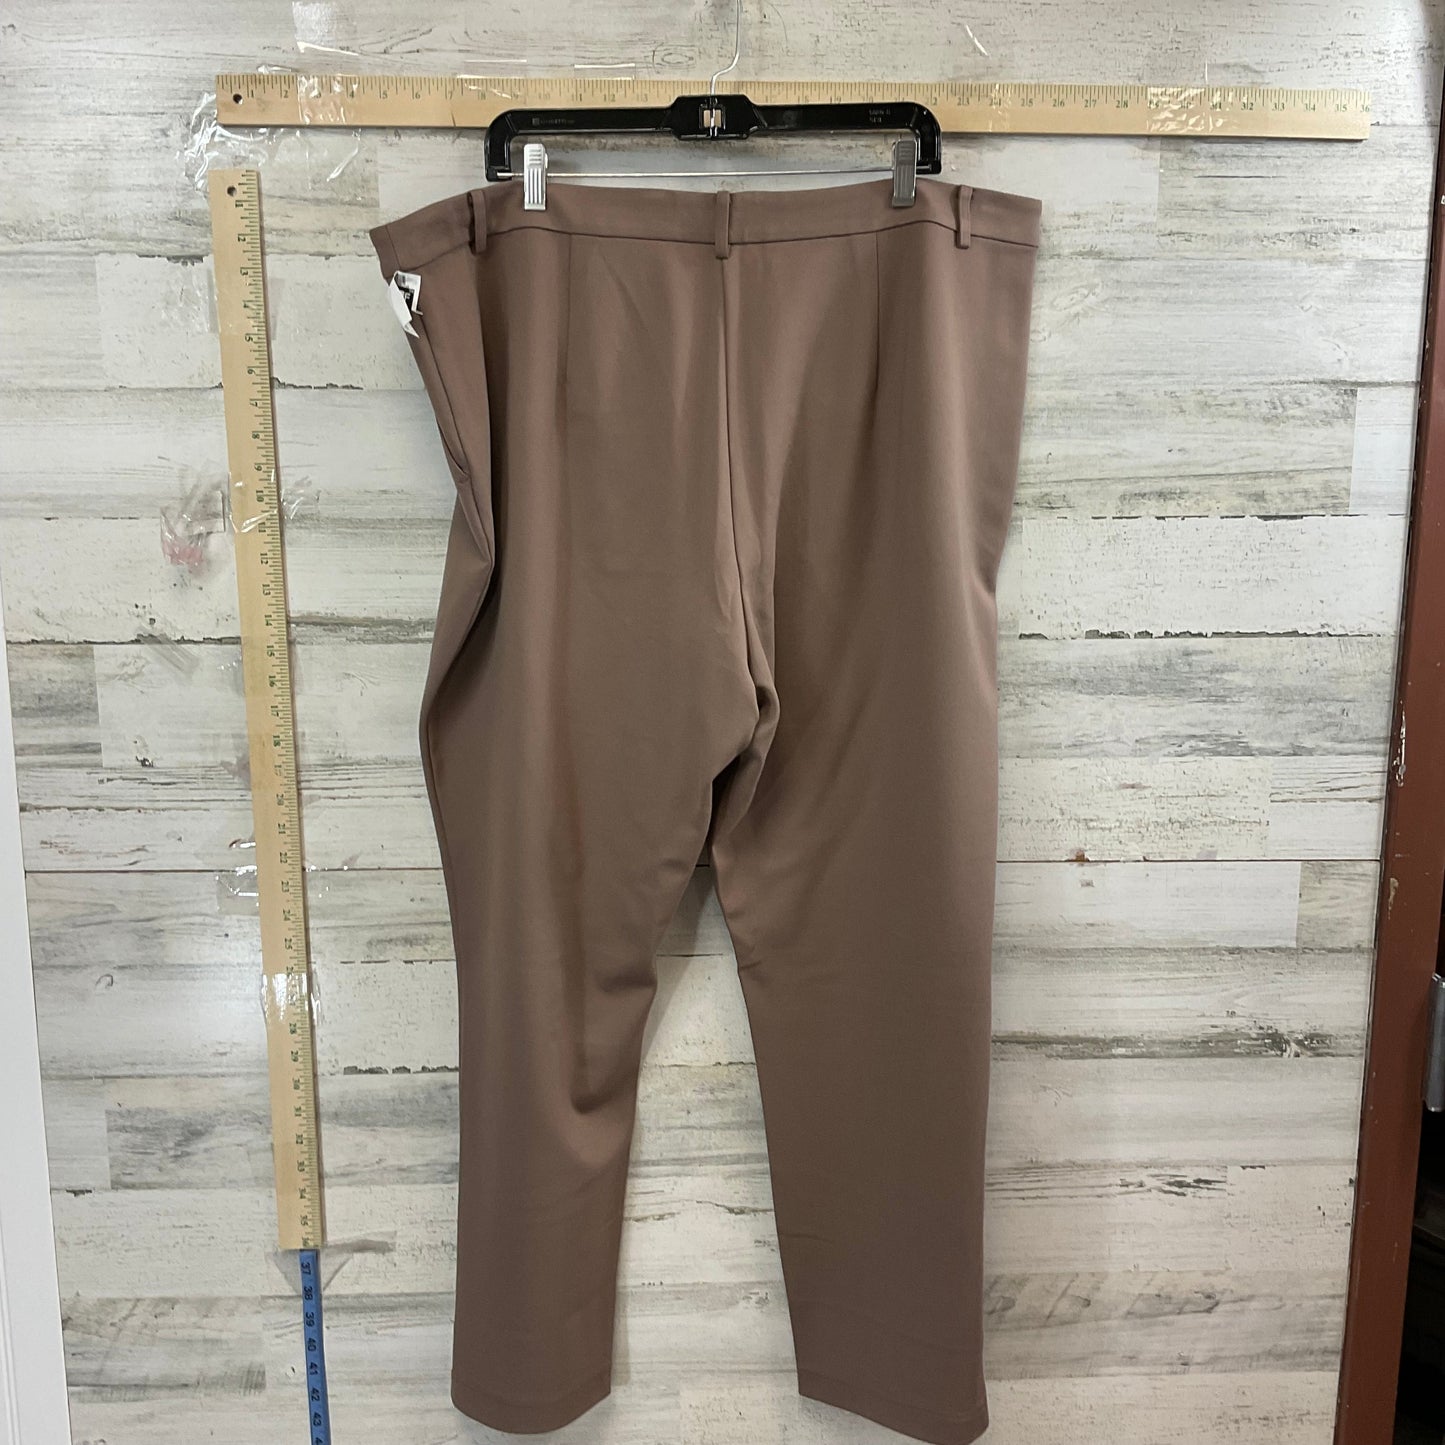 Brown Pants Dress Coldwater Creek, Size 22womens